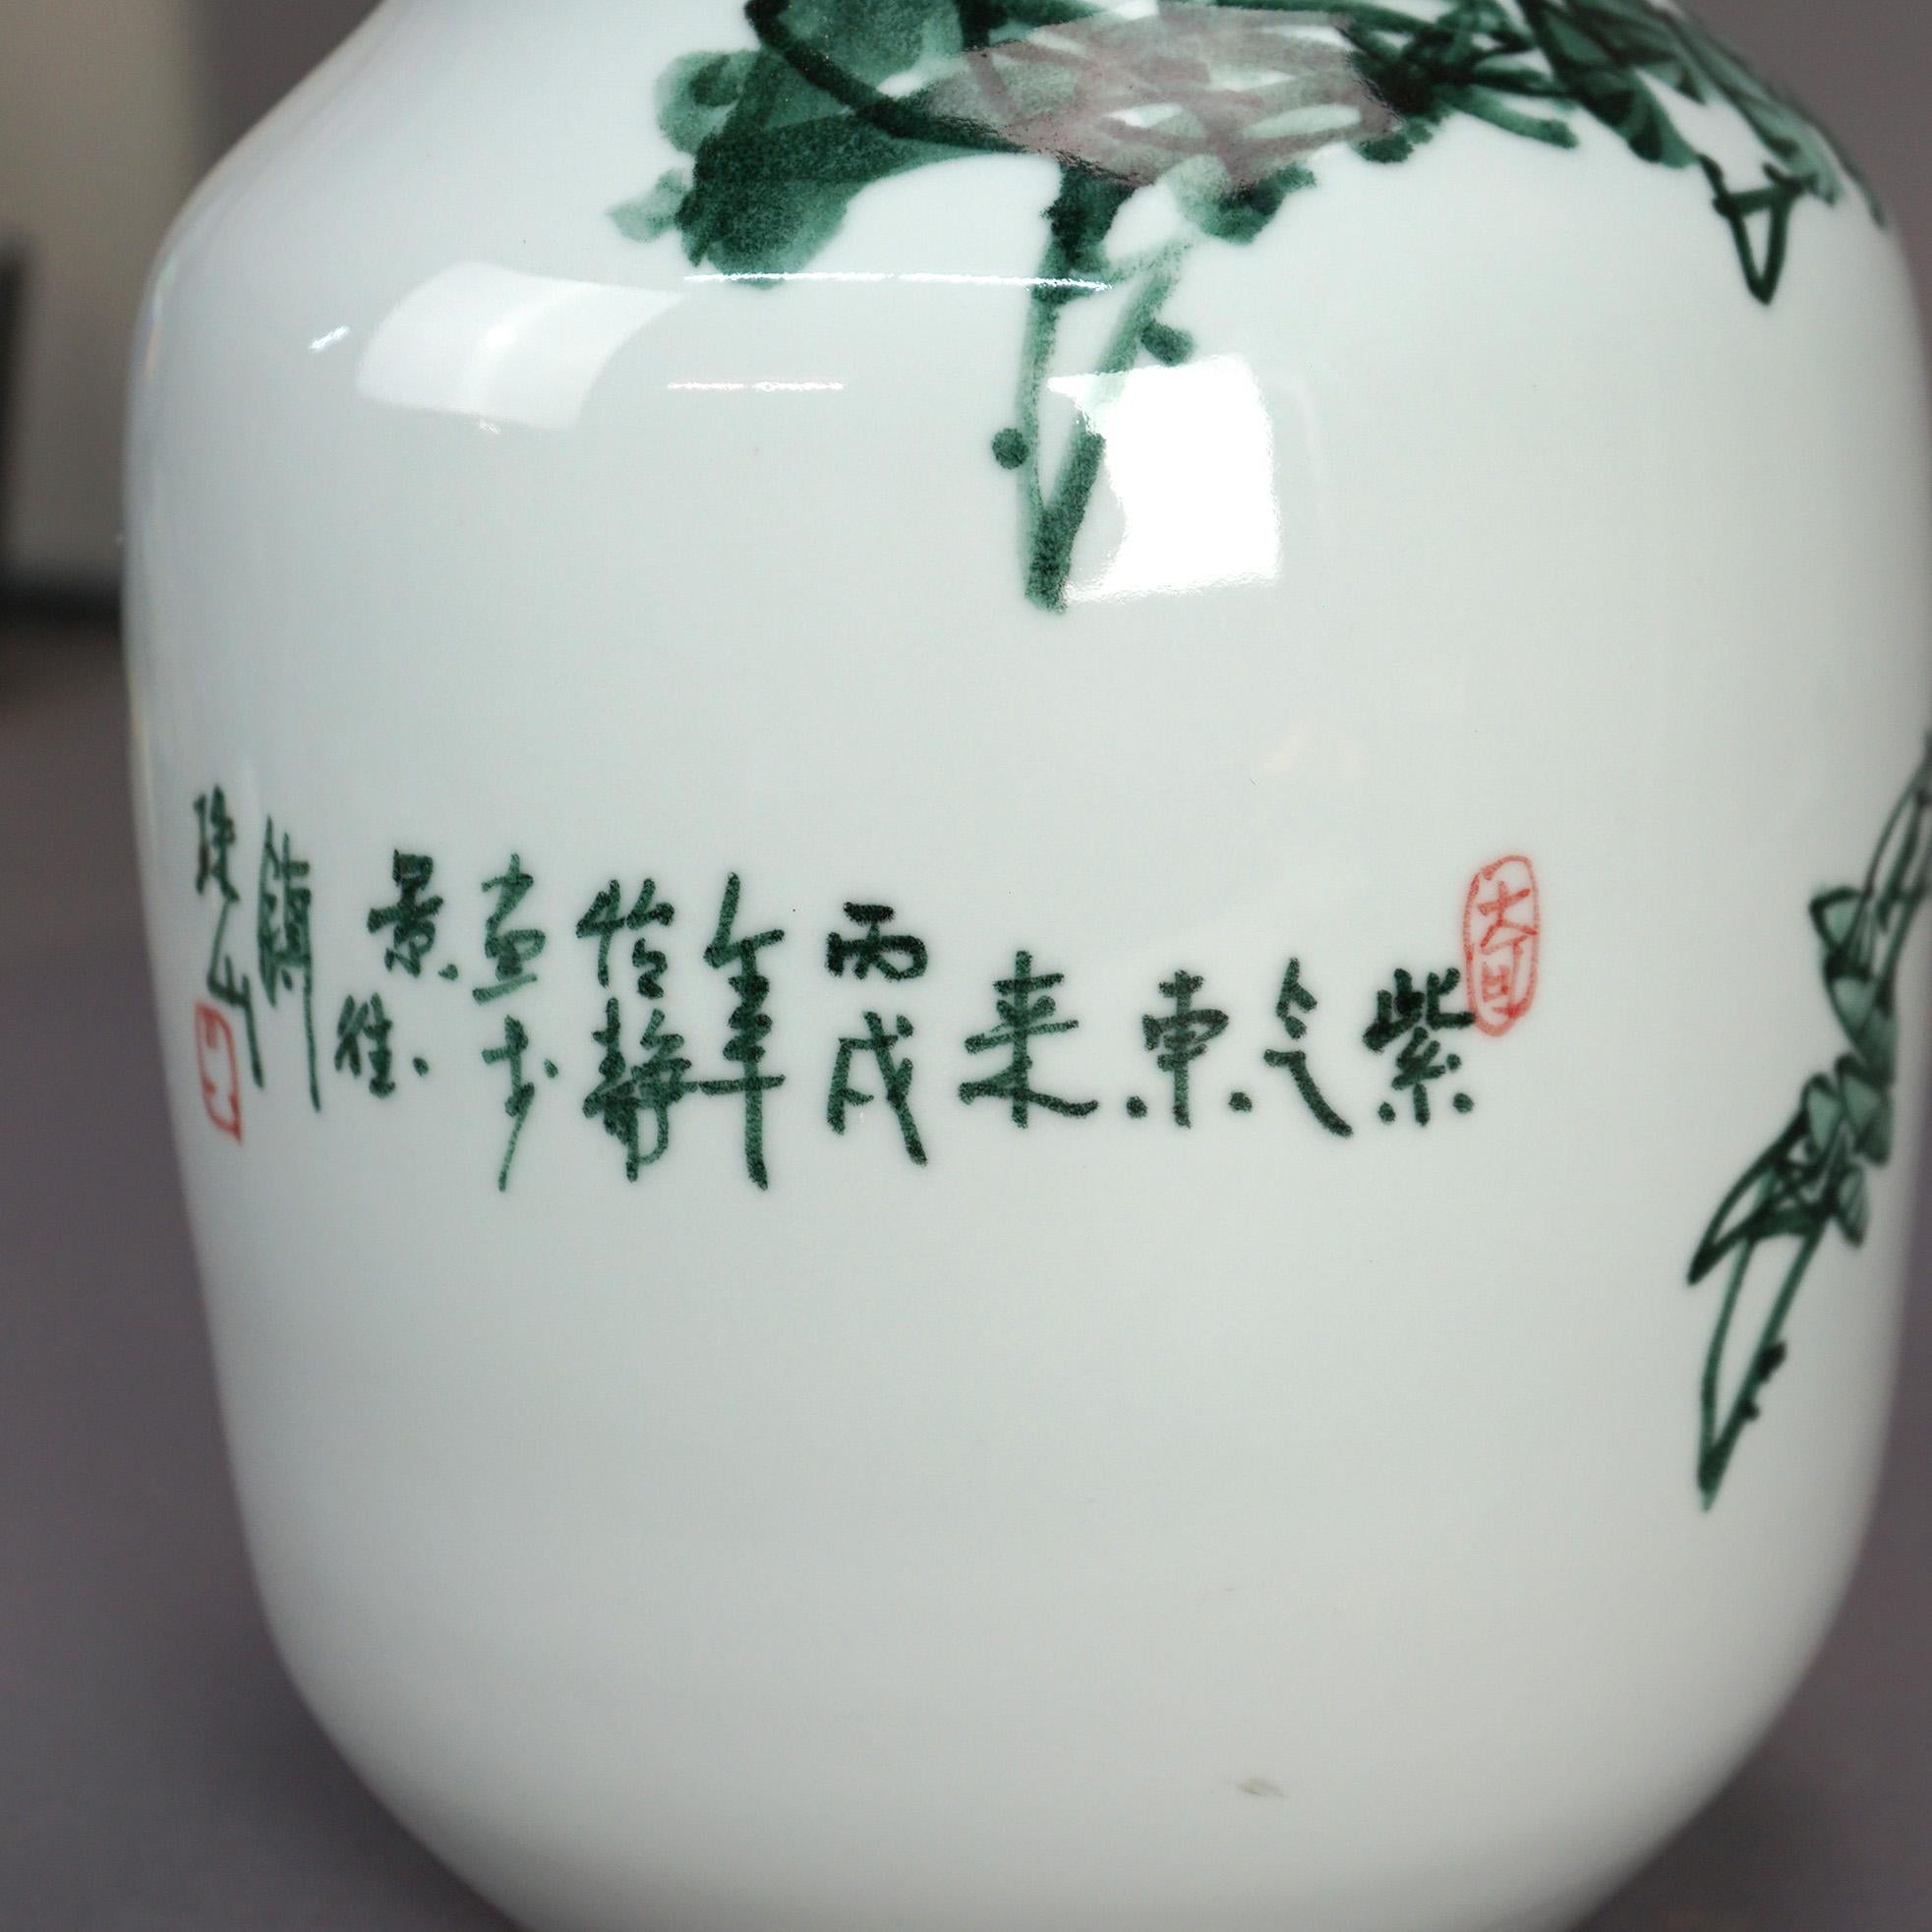 Chinese Jingdezhen Porcelain Jar Vase with Hand Painted Myrtle Design 20thC For Sale 3